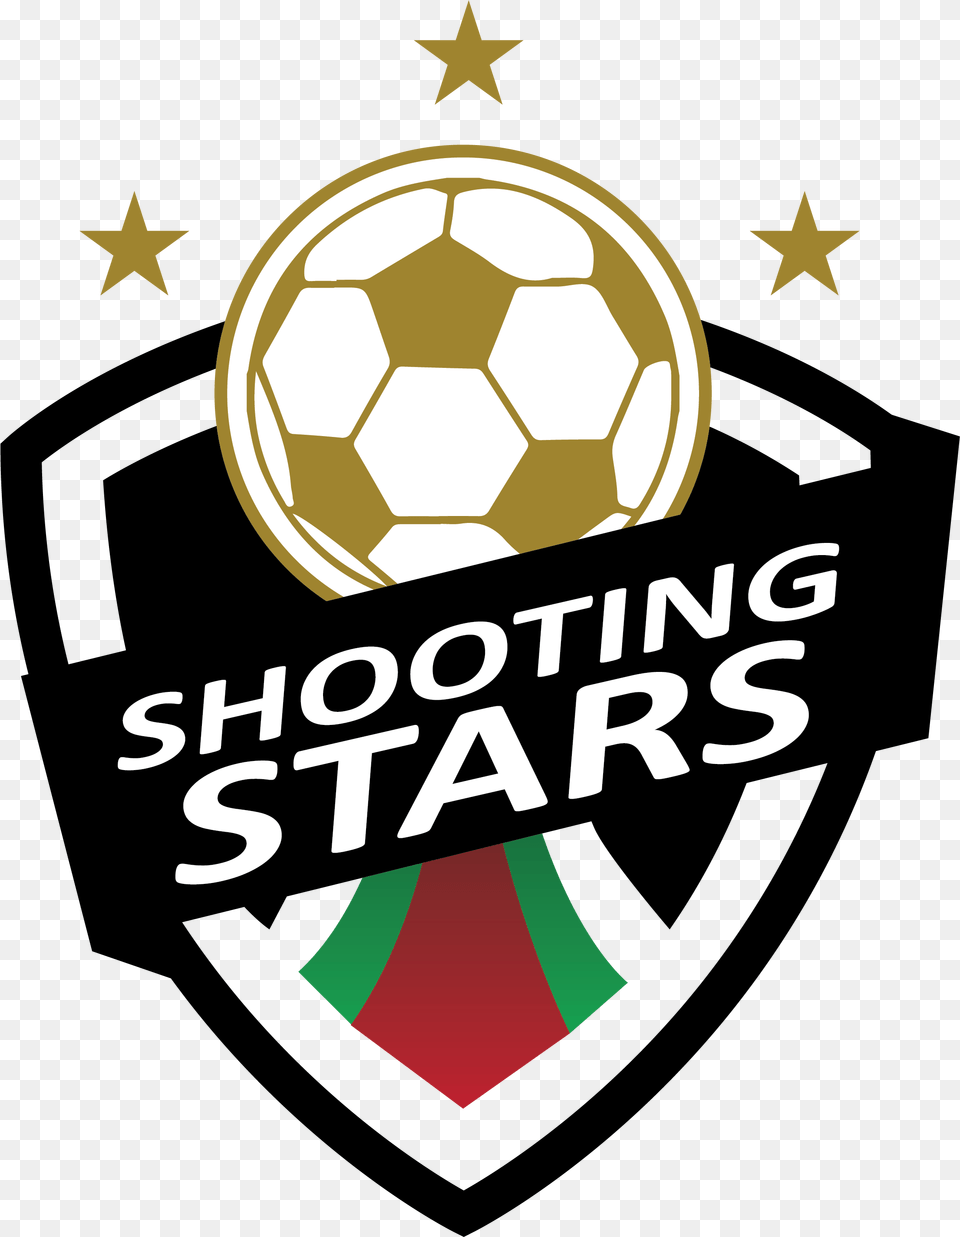 Shooting Stars Fc Shooting Stars Fc Logo, Ball, Football, Soccer, Soccer Ball Free Transparent Png